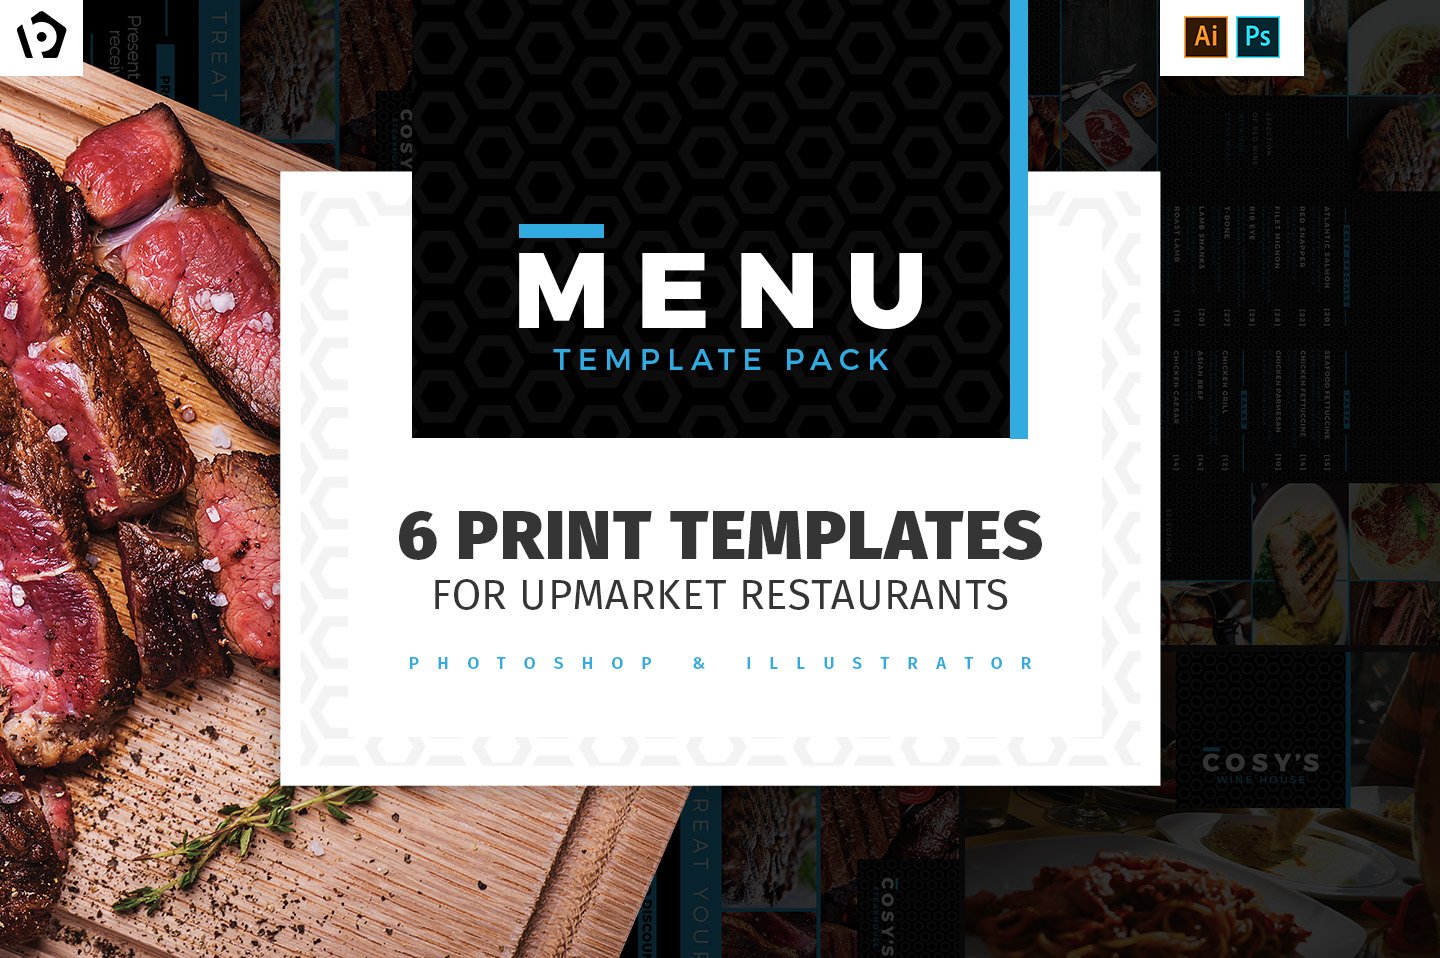 Restaurant Menu Templates Pack cover image.